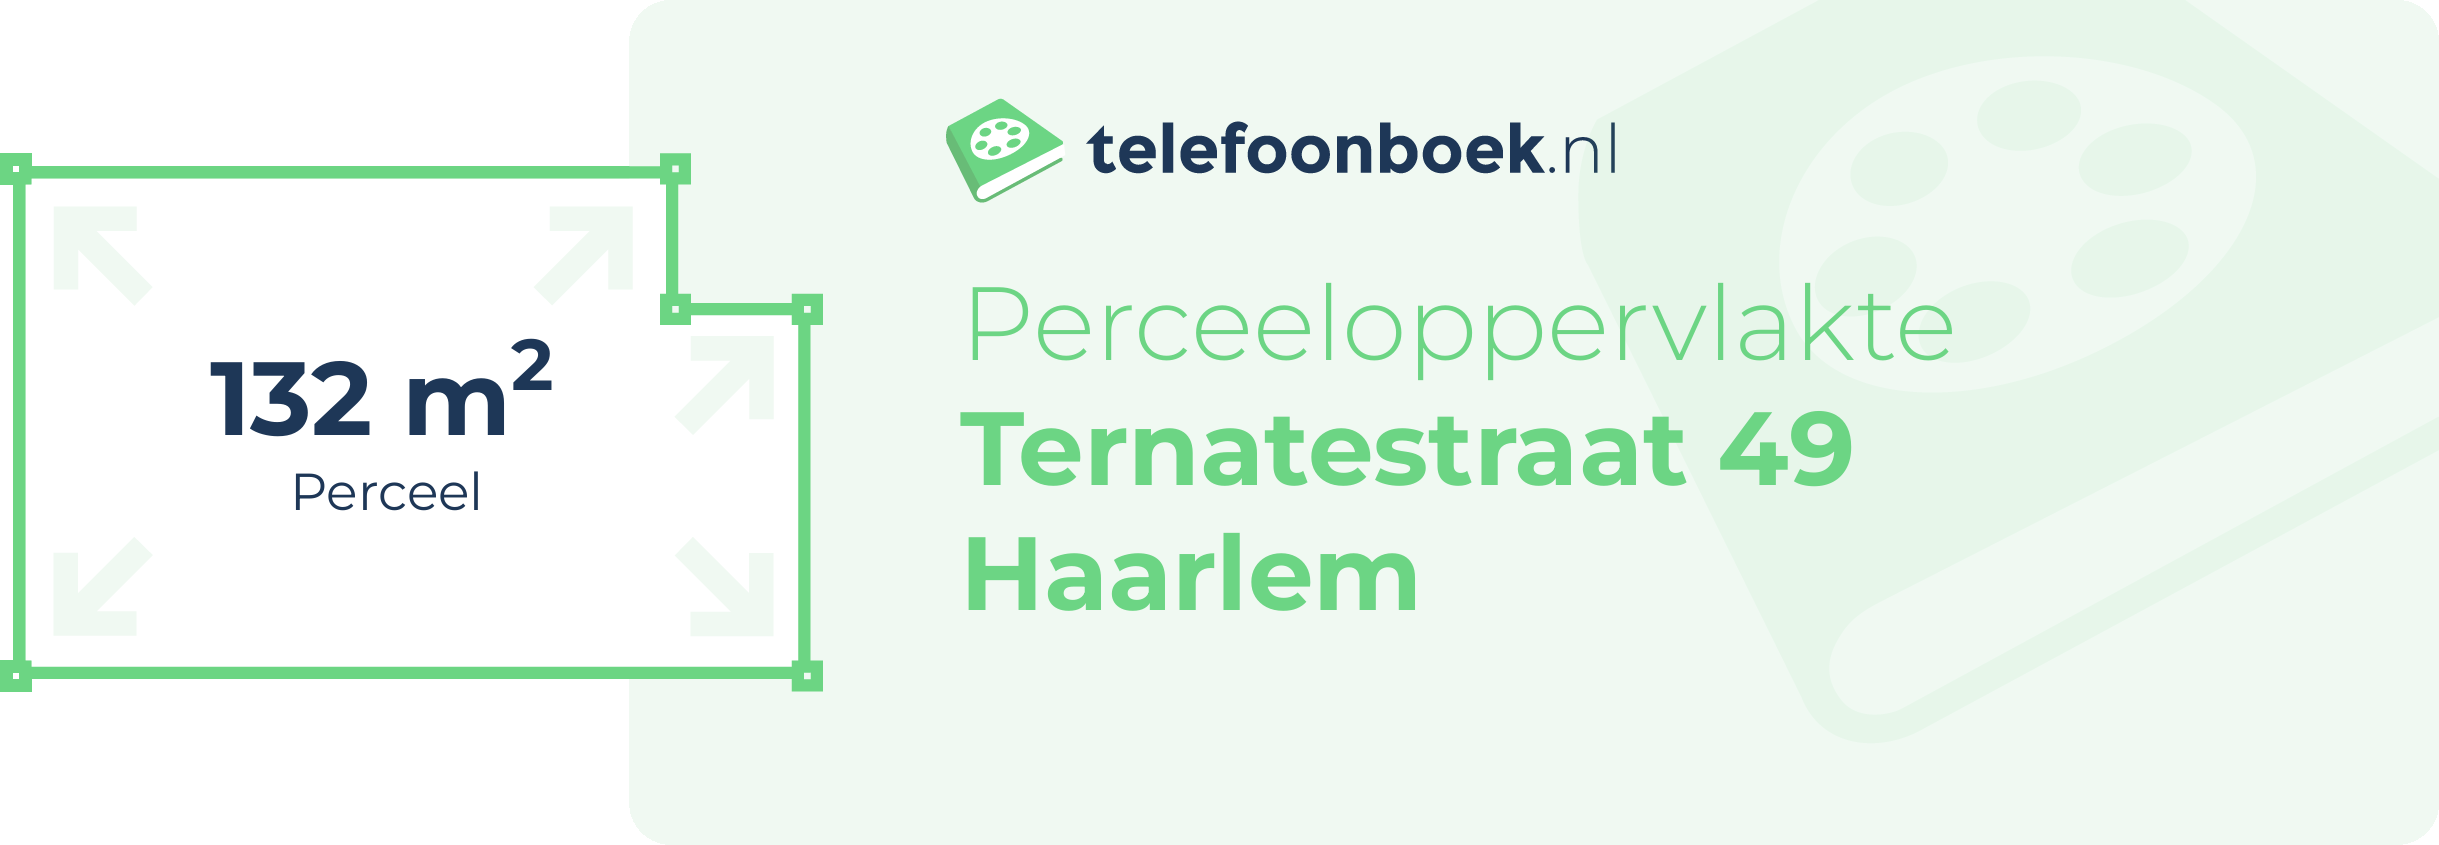 Perceeloppervlakte Ternatestraat 49 Haarlem